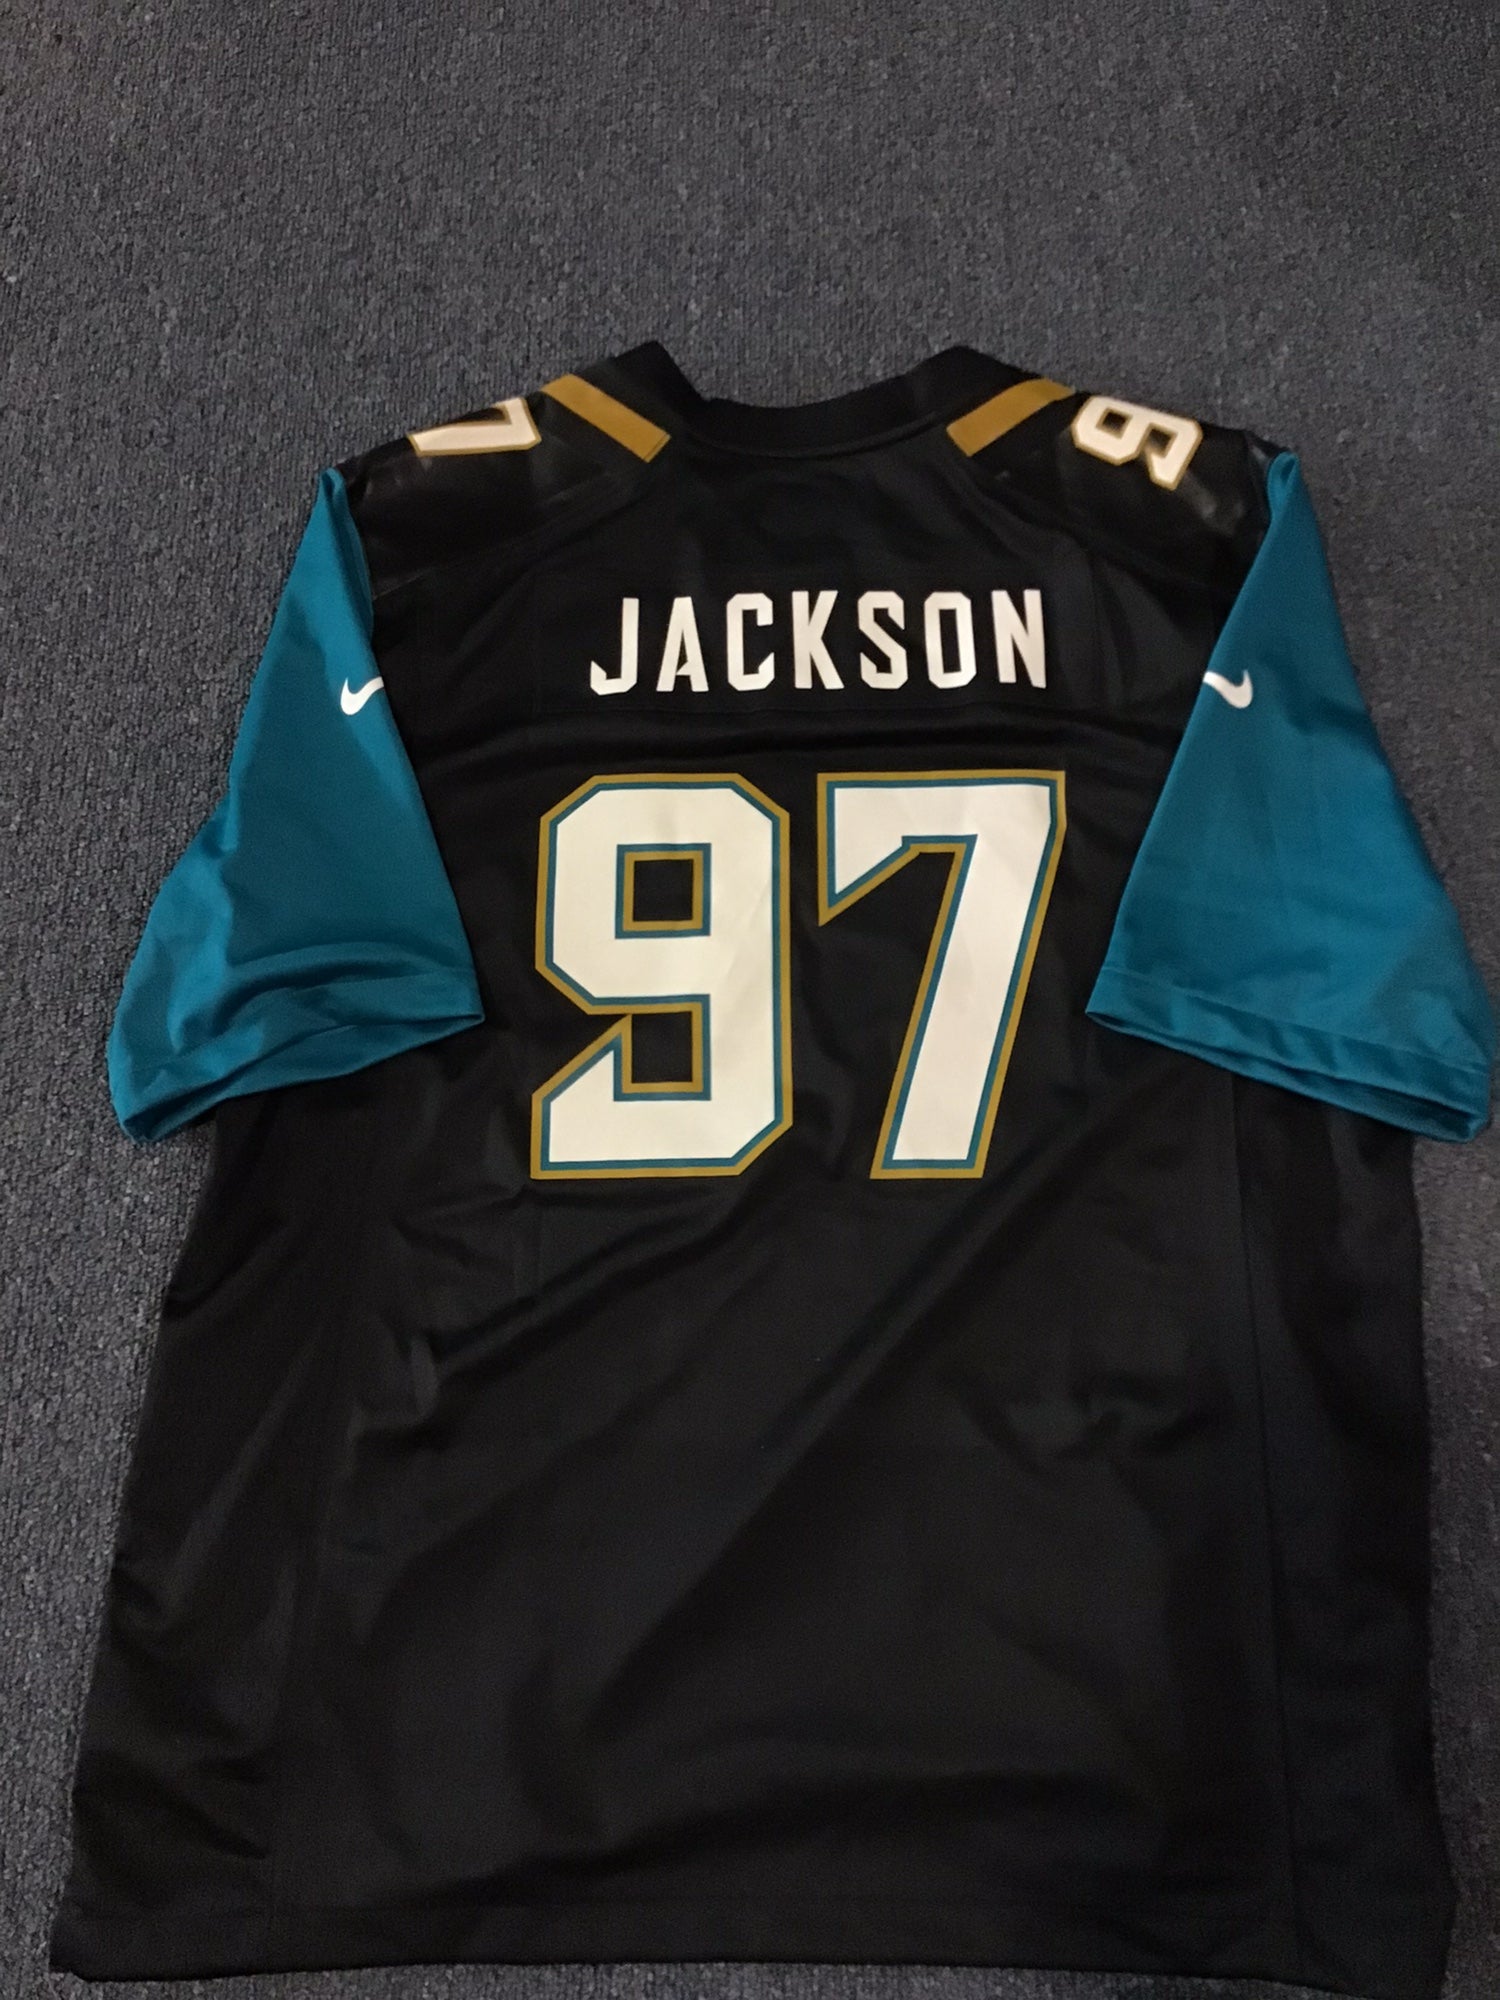 NEW Jacksonville Jaguars Men's Nike Jersey